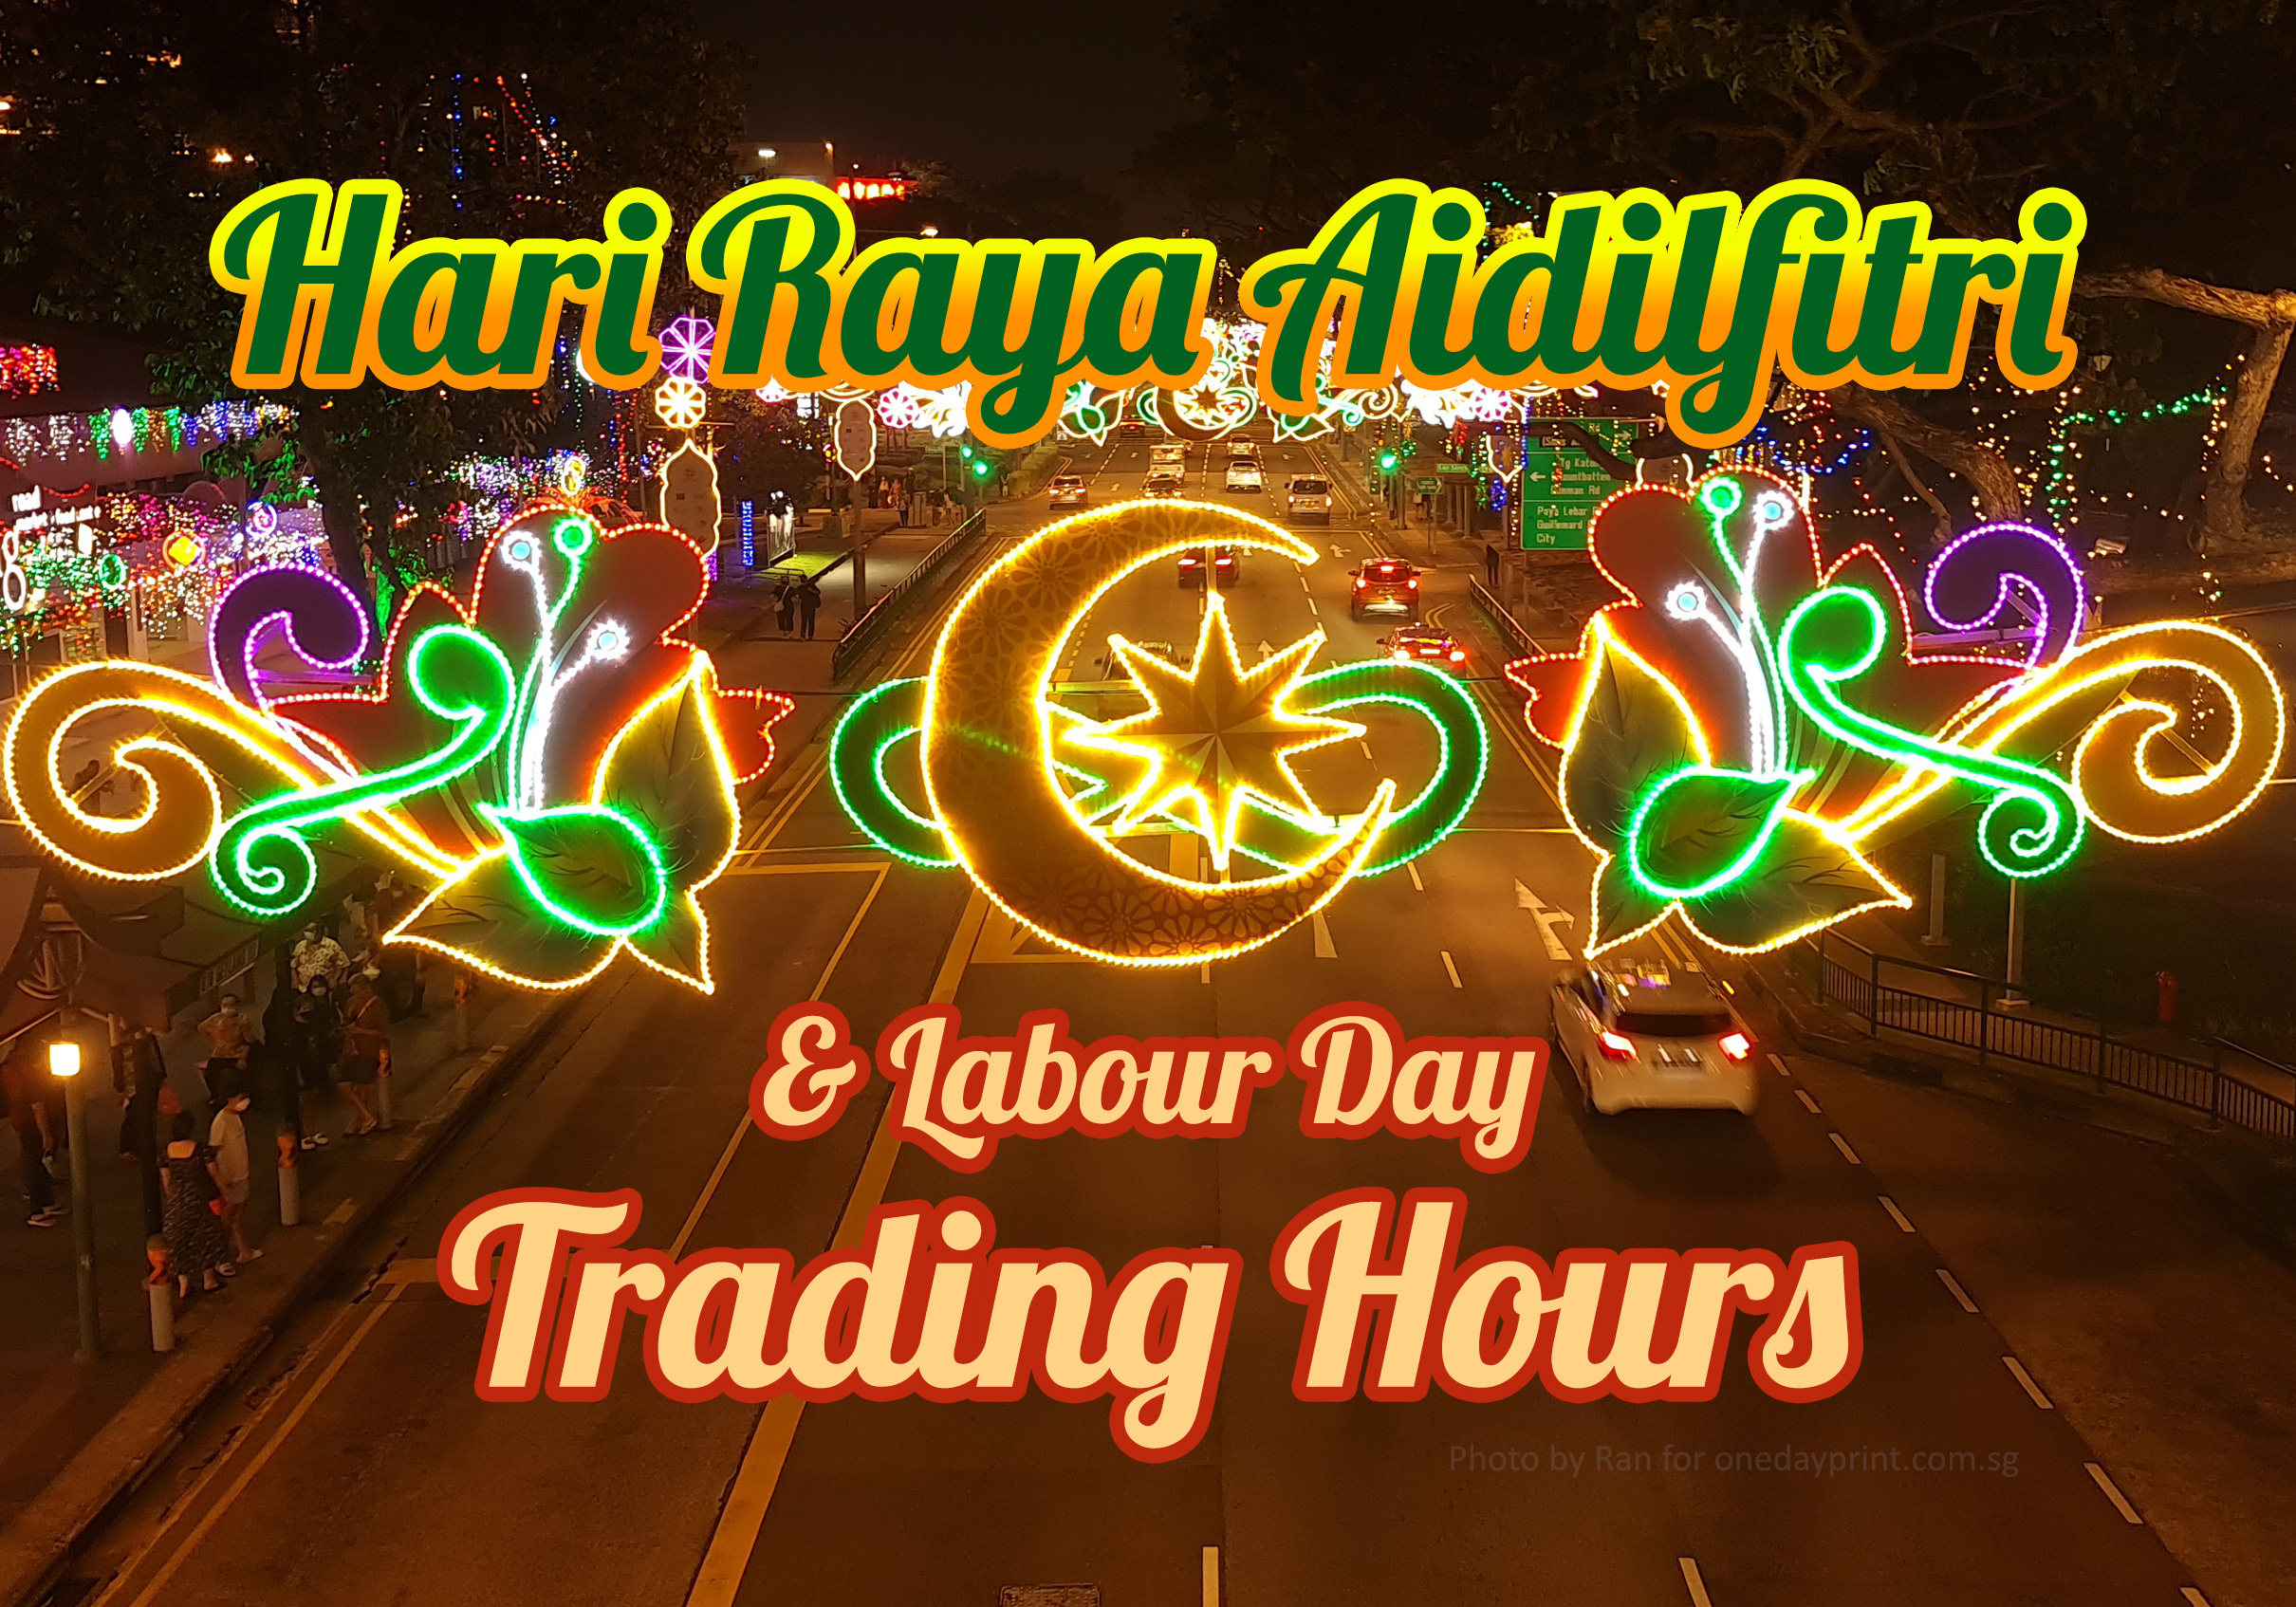 Info - Hari Raya Aidilfitri & Labour Day Trading Hours, Photo by Ran for onedayprint.com.sg